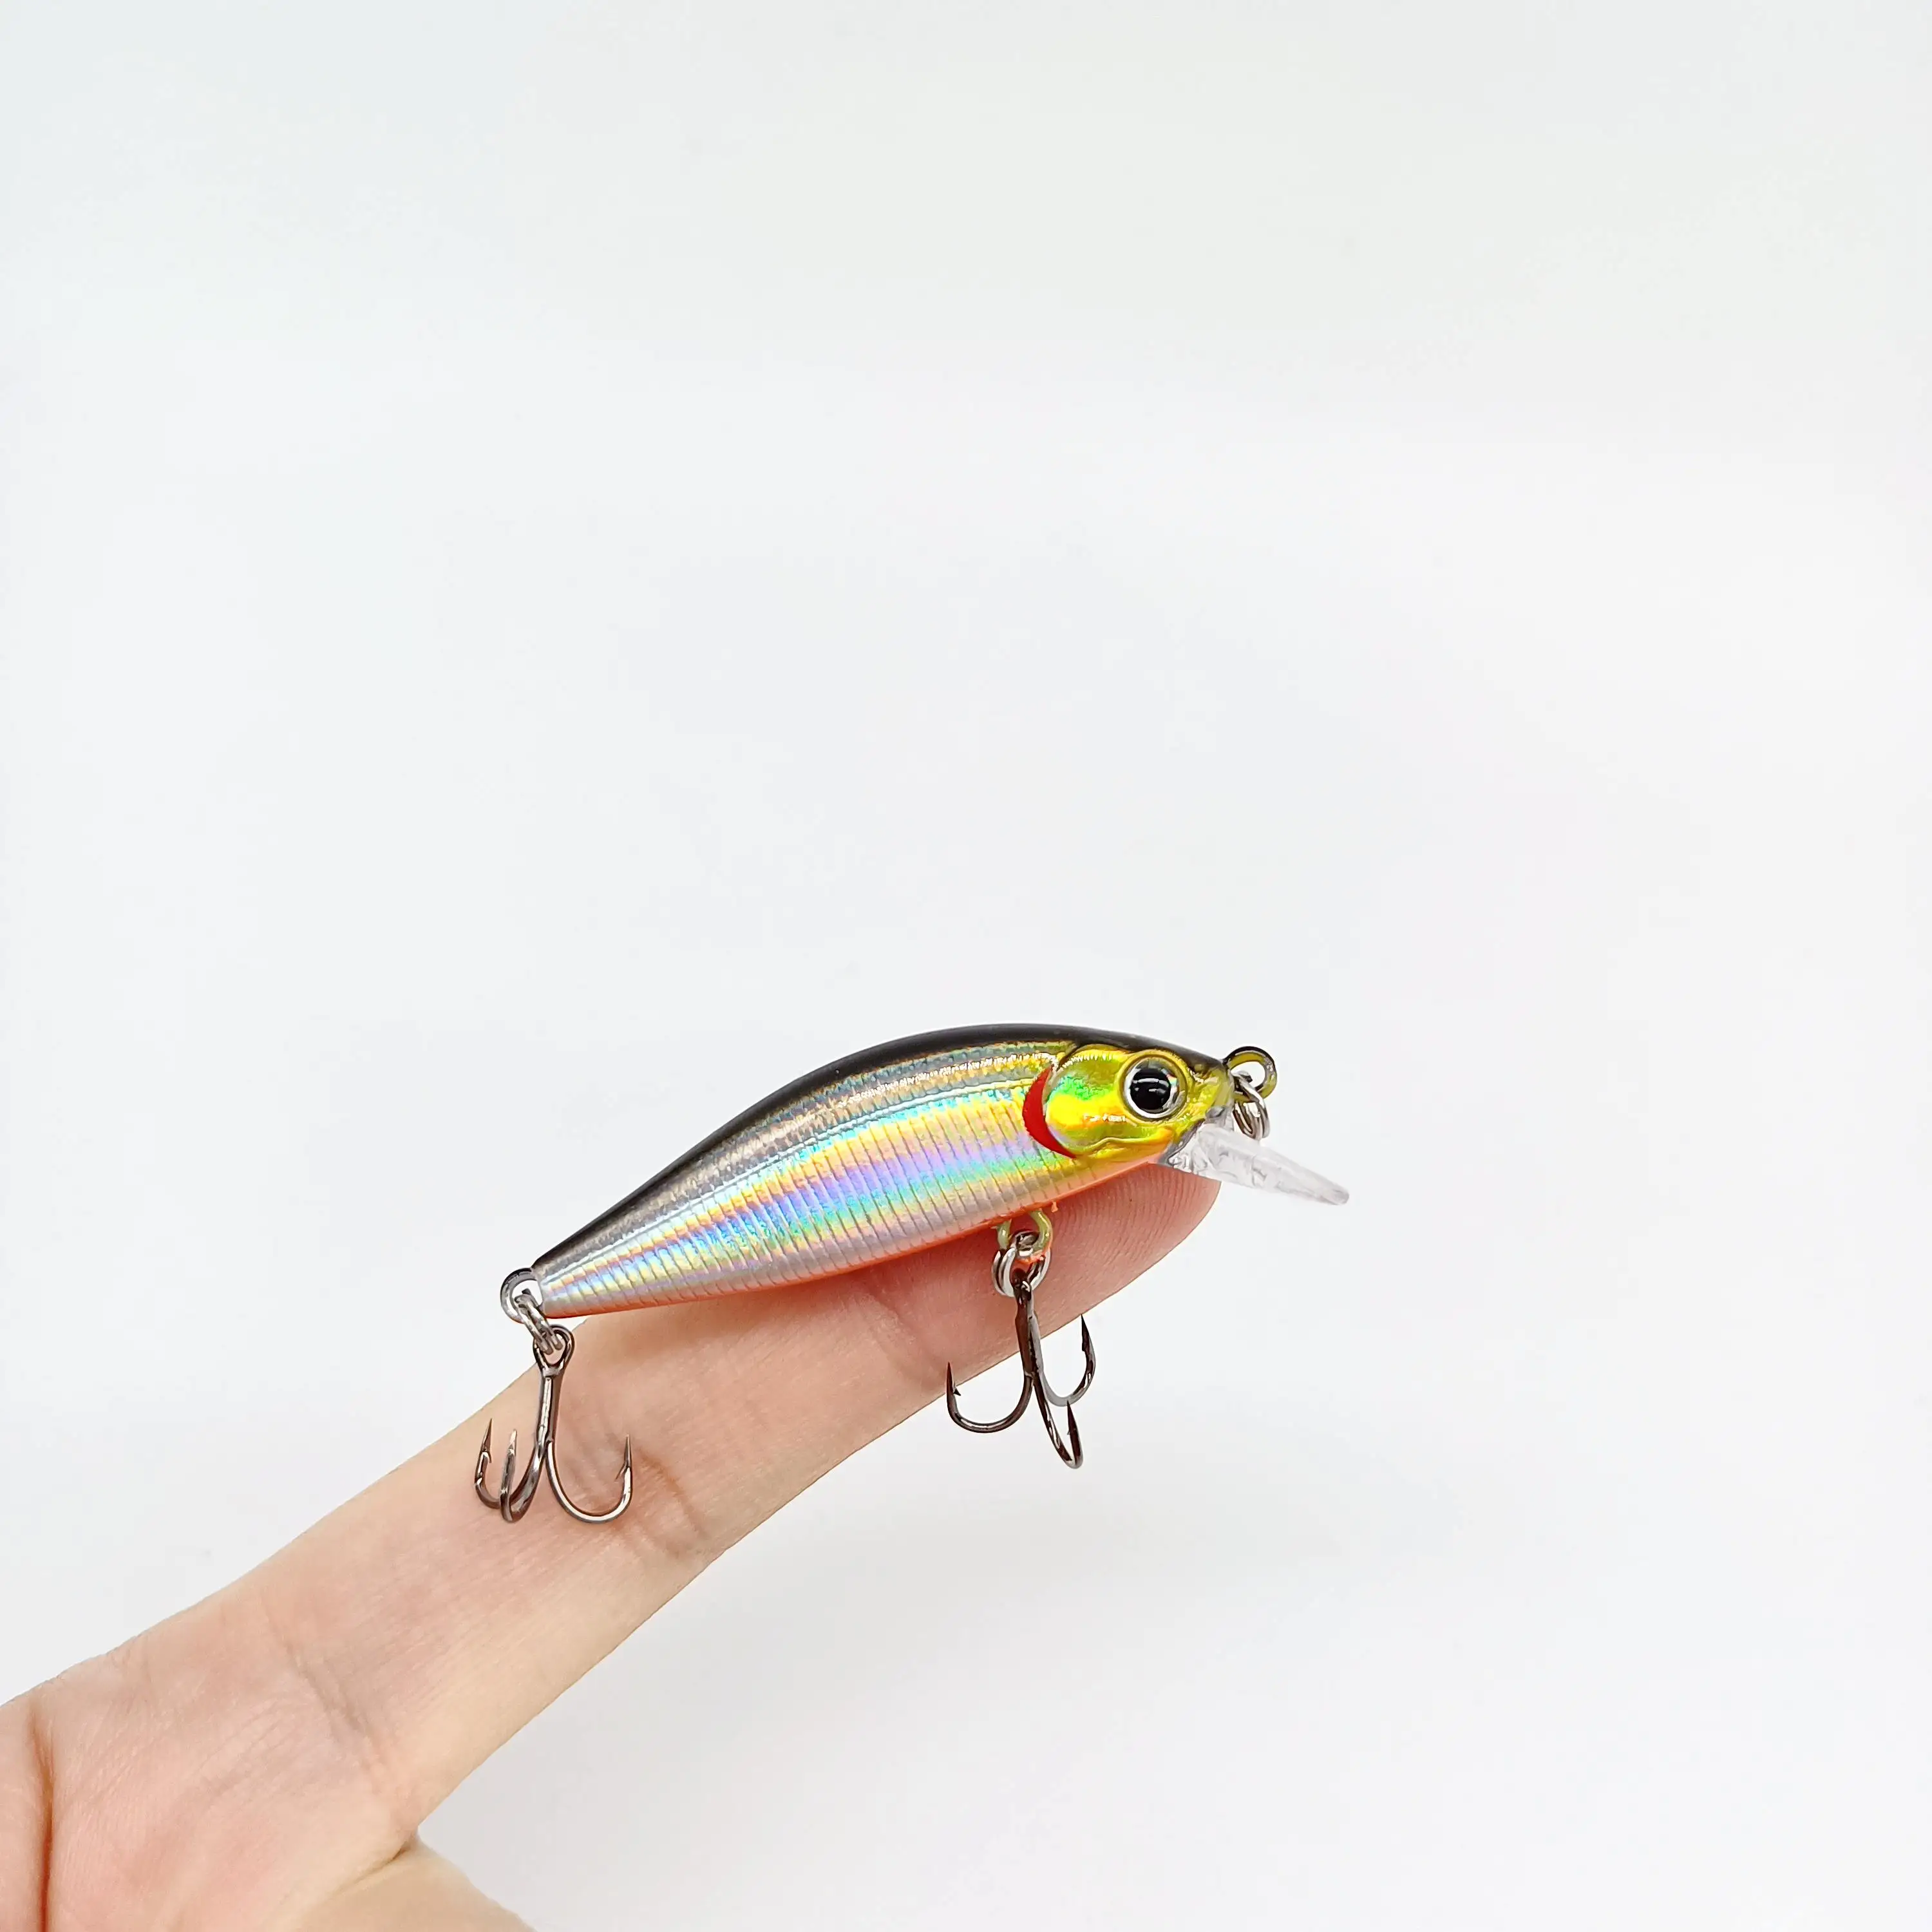 

DUODUOYU 1PCS Mini Sinking Minnow Fishing Lures 3g/45mm Jerkbaits Peche Artificial Bait Wobbler Lure for Trout Bass Carp Tackle